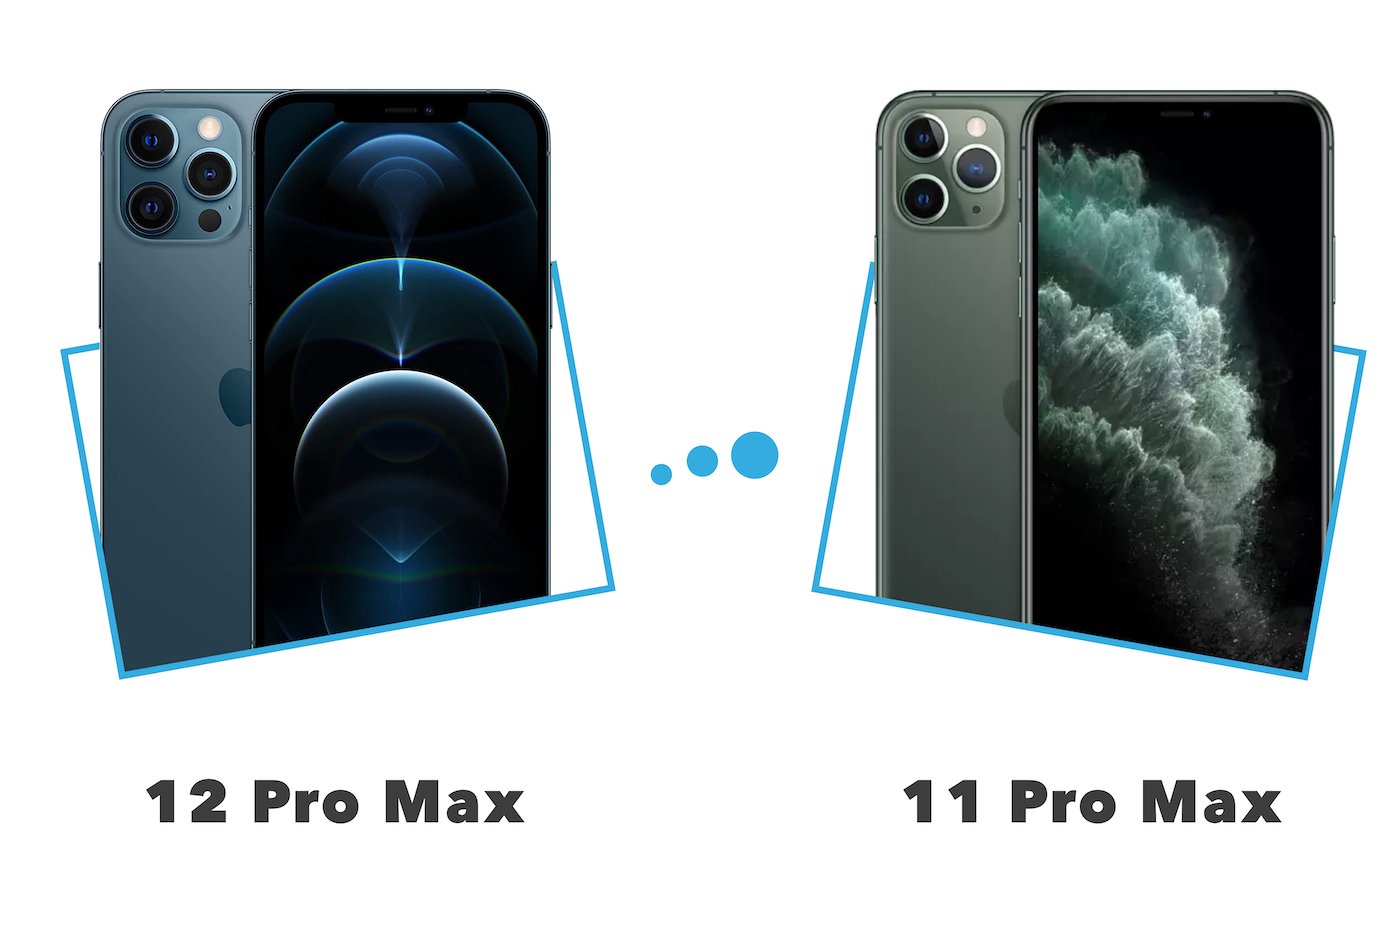 Protection d'écran iPhone 11 / 11 Pro / Pro Max iPhone 11 Pro Max